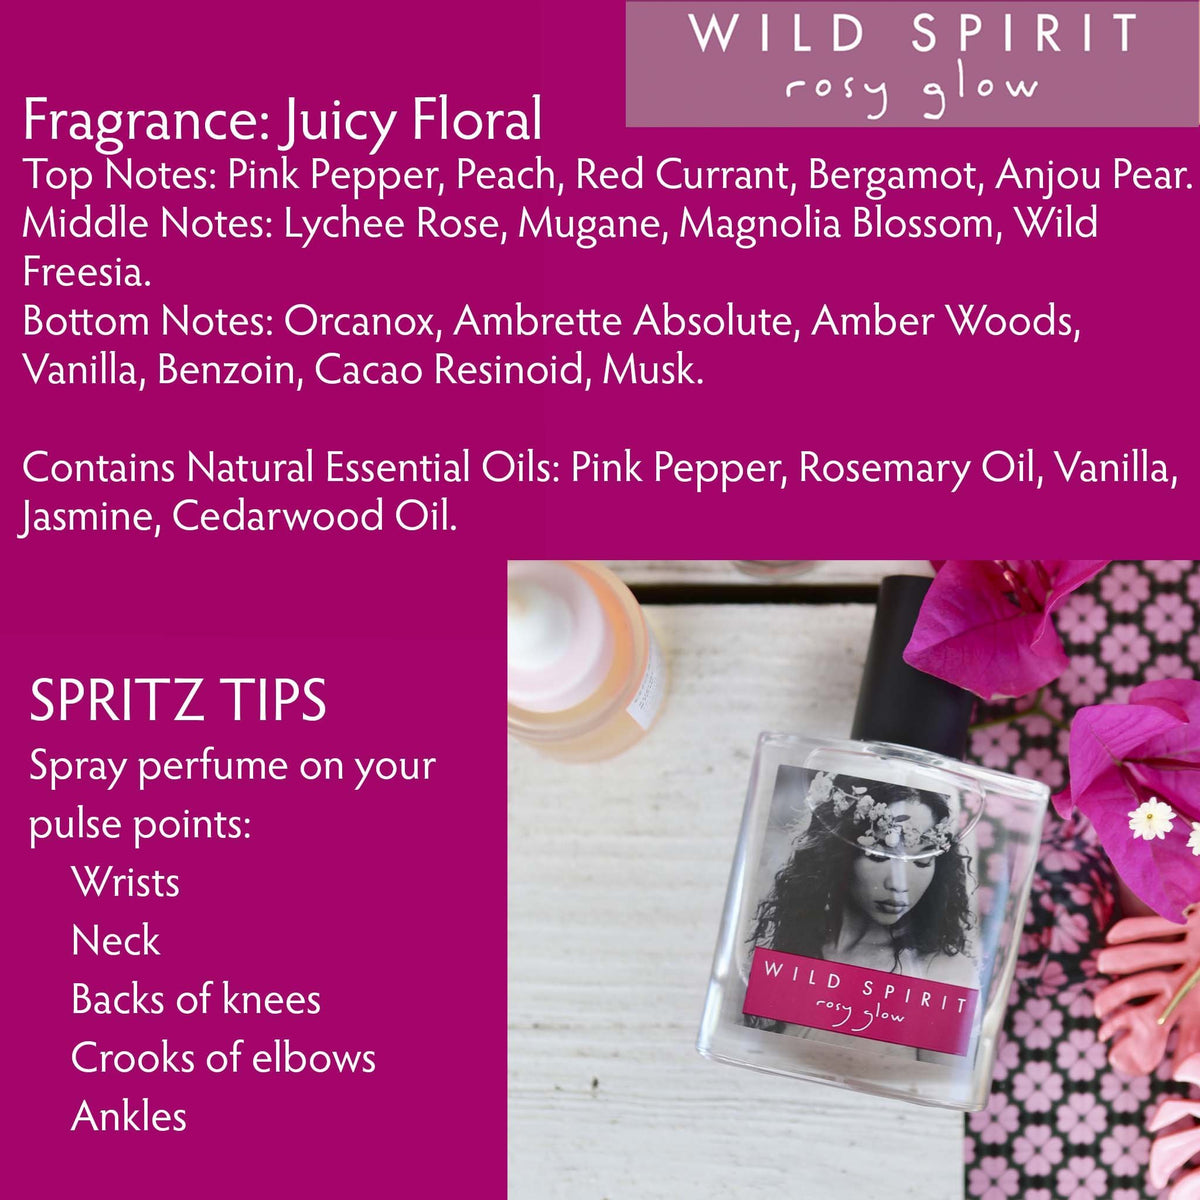 Rosy Glow Eau de Parfum Spray - Wild Spirit